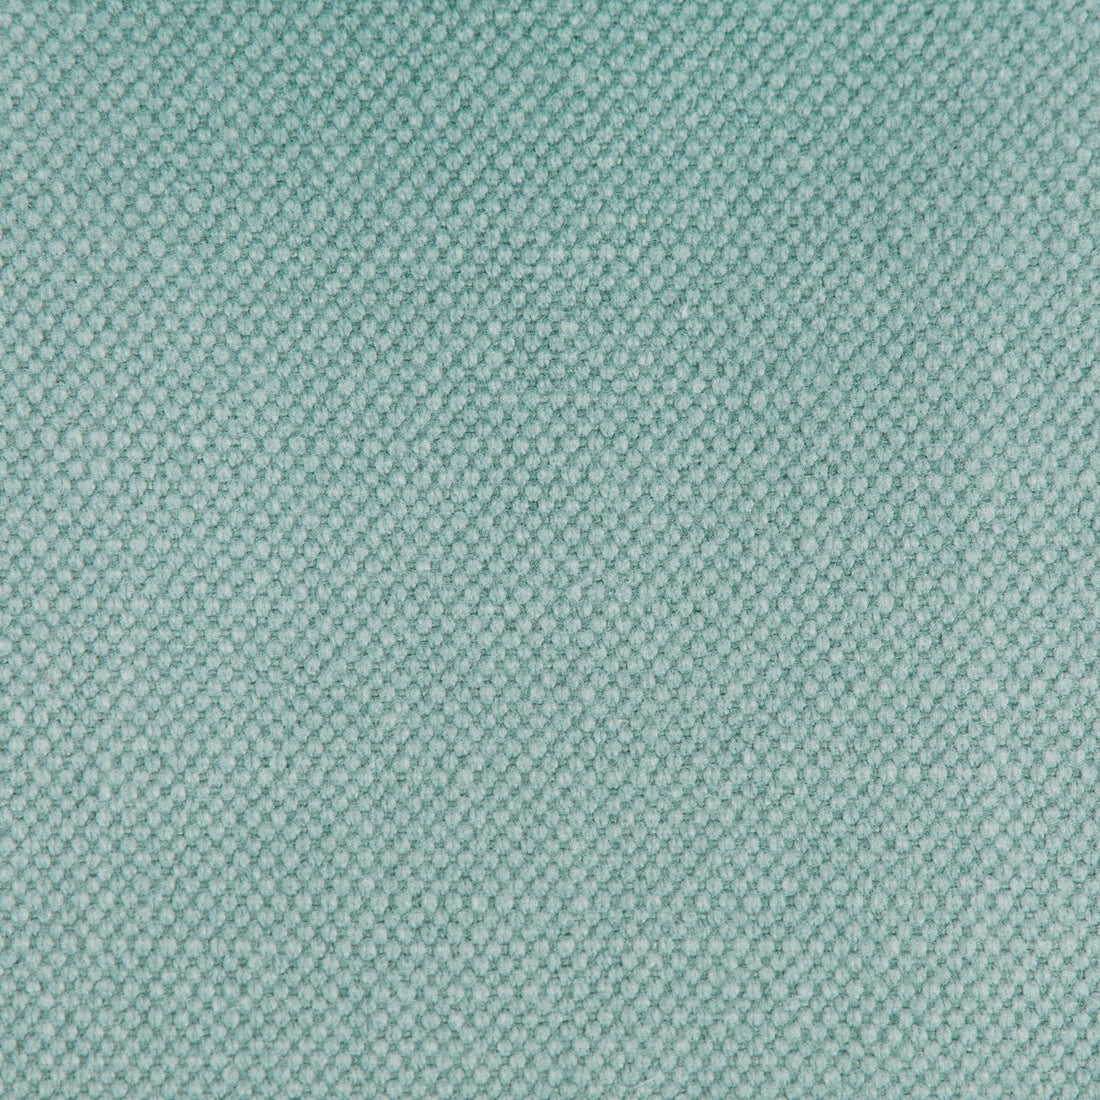 Lima fabric in agua color - pattern GDT5616.026.0 - by Gaston y Daniela in the Gaston Nuevo Mundo collection